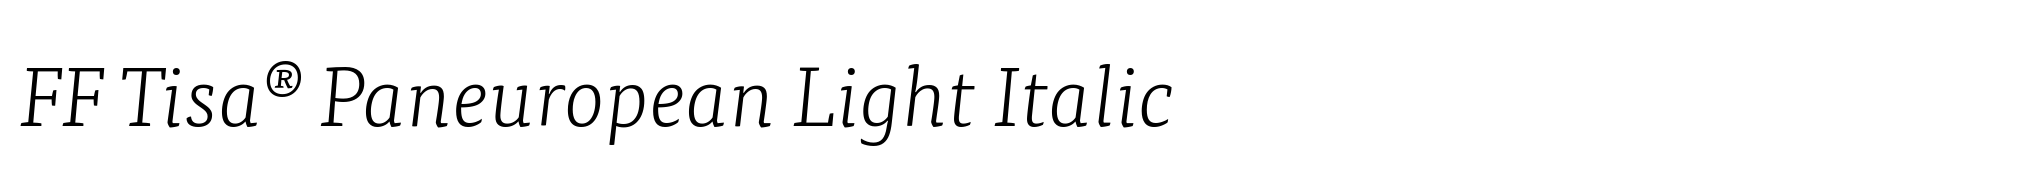 FF Tisa® Paneuropean Light Italic image